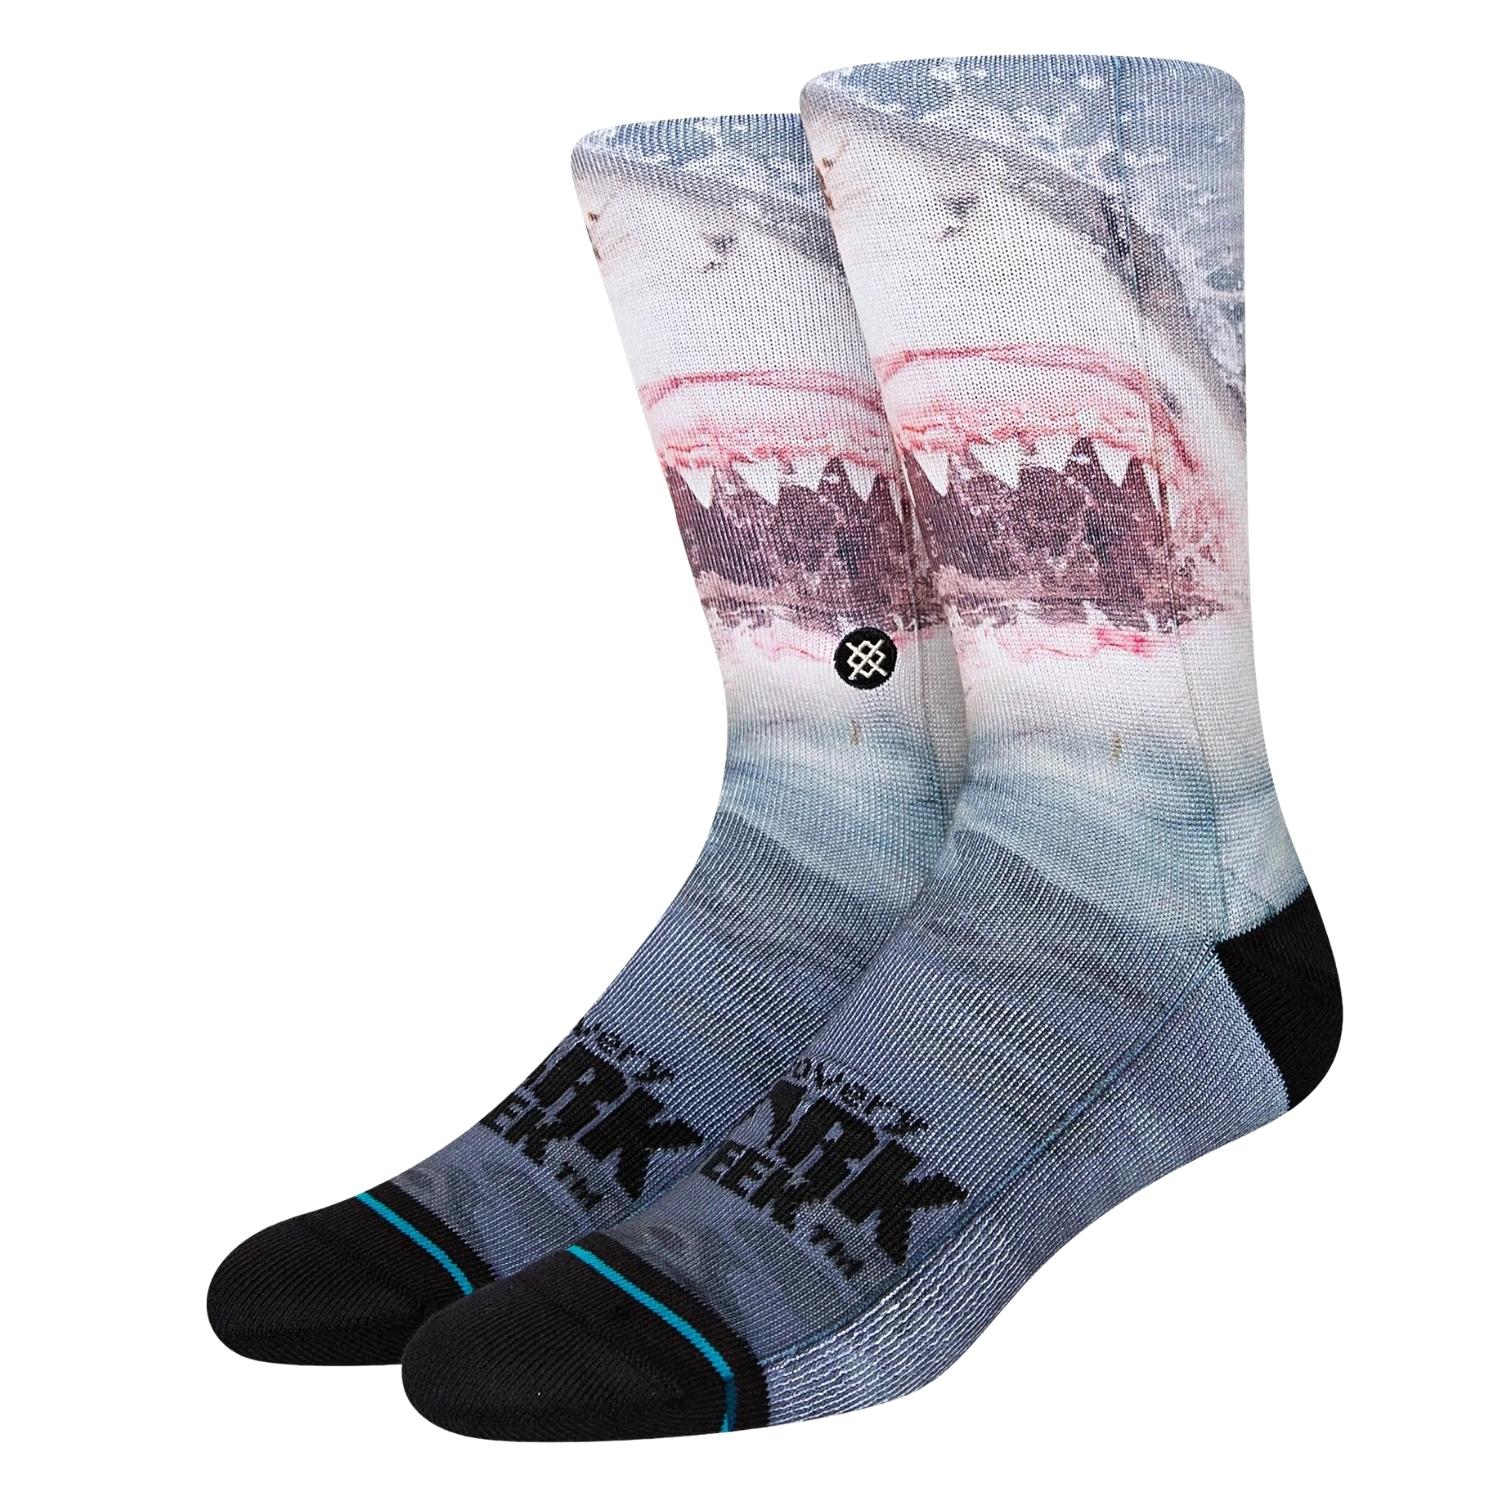 Stance x Shark Week Pearly Whites Socks - Blue - Unisex Crew Length Socks by Stance